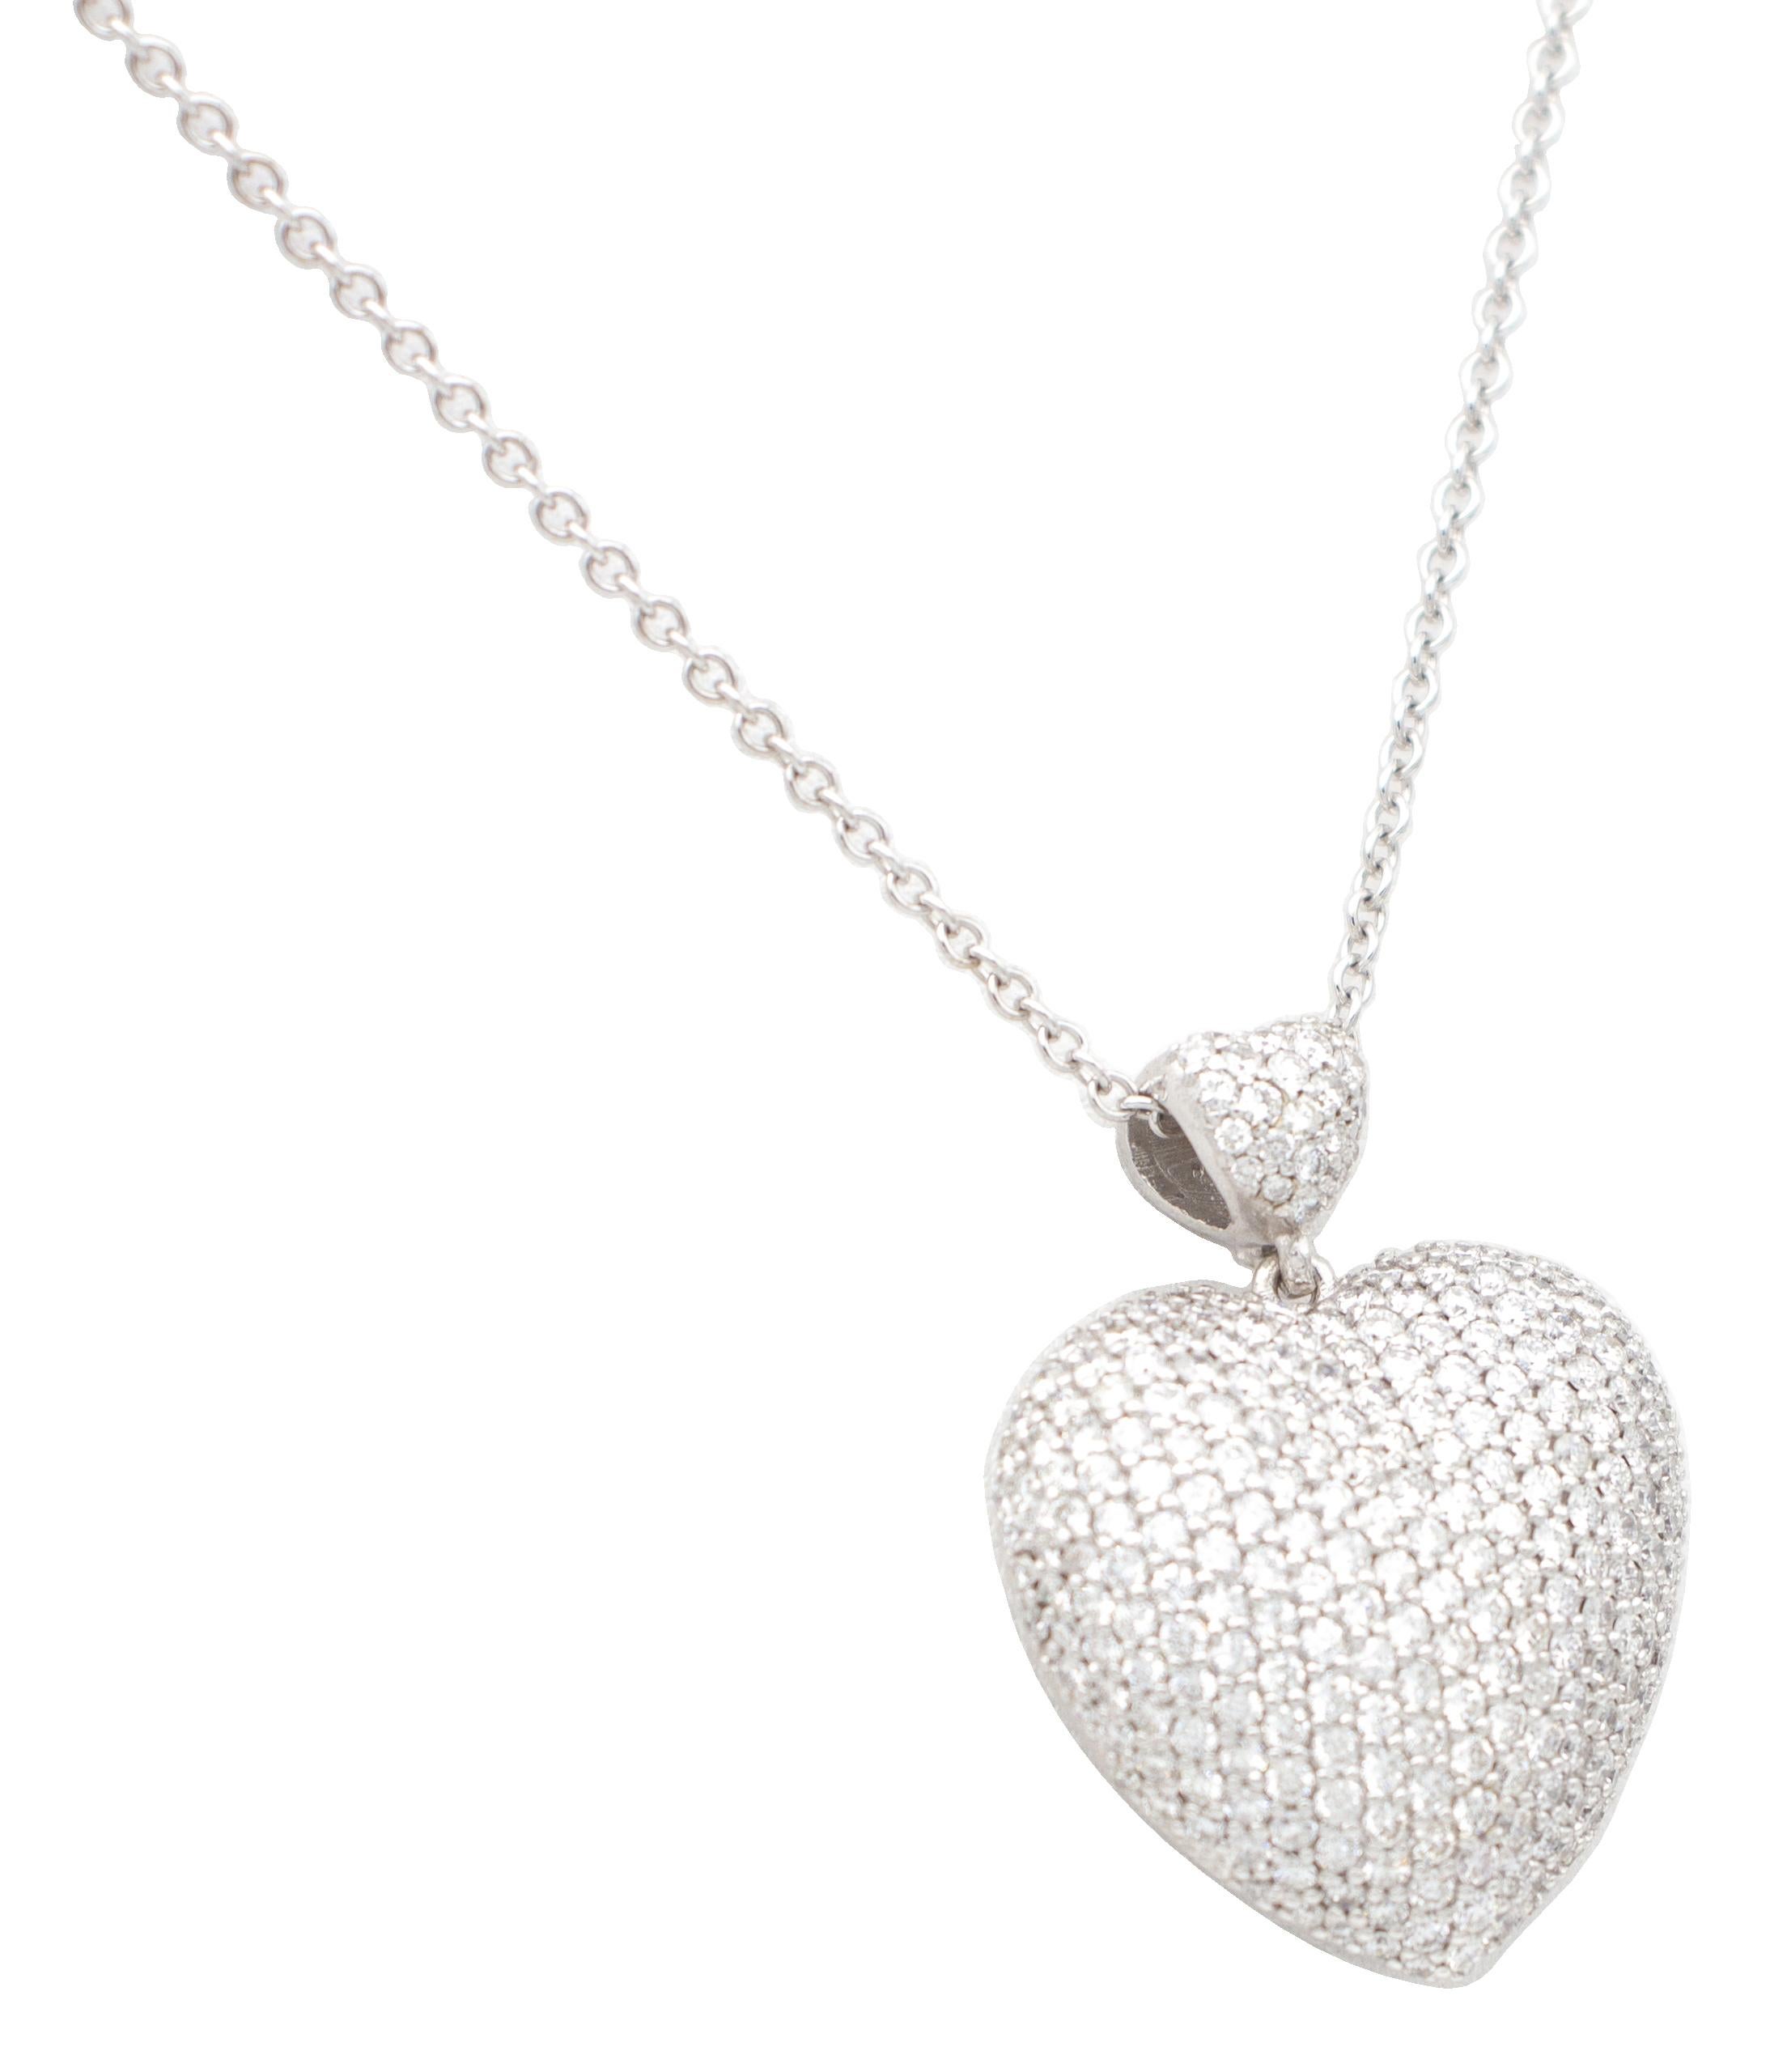 Mixed Cut 3.51 Ct White Diamonds, 18kt White Gold Heart Shape Pendant Necklace